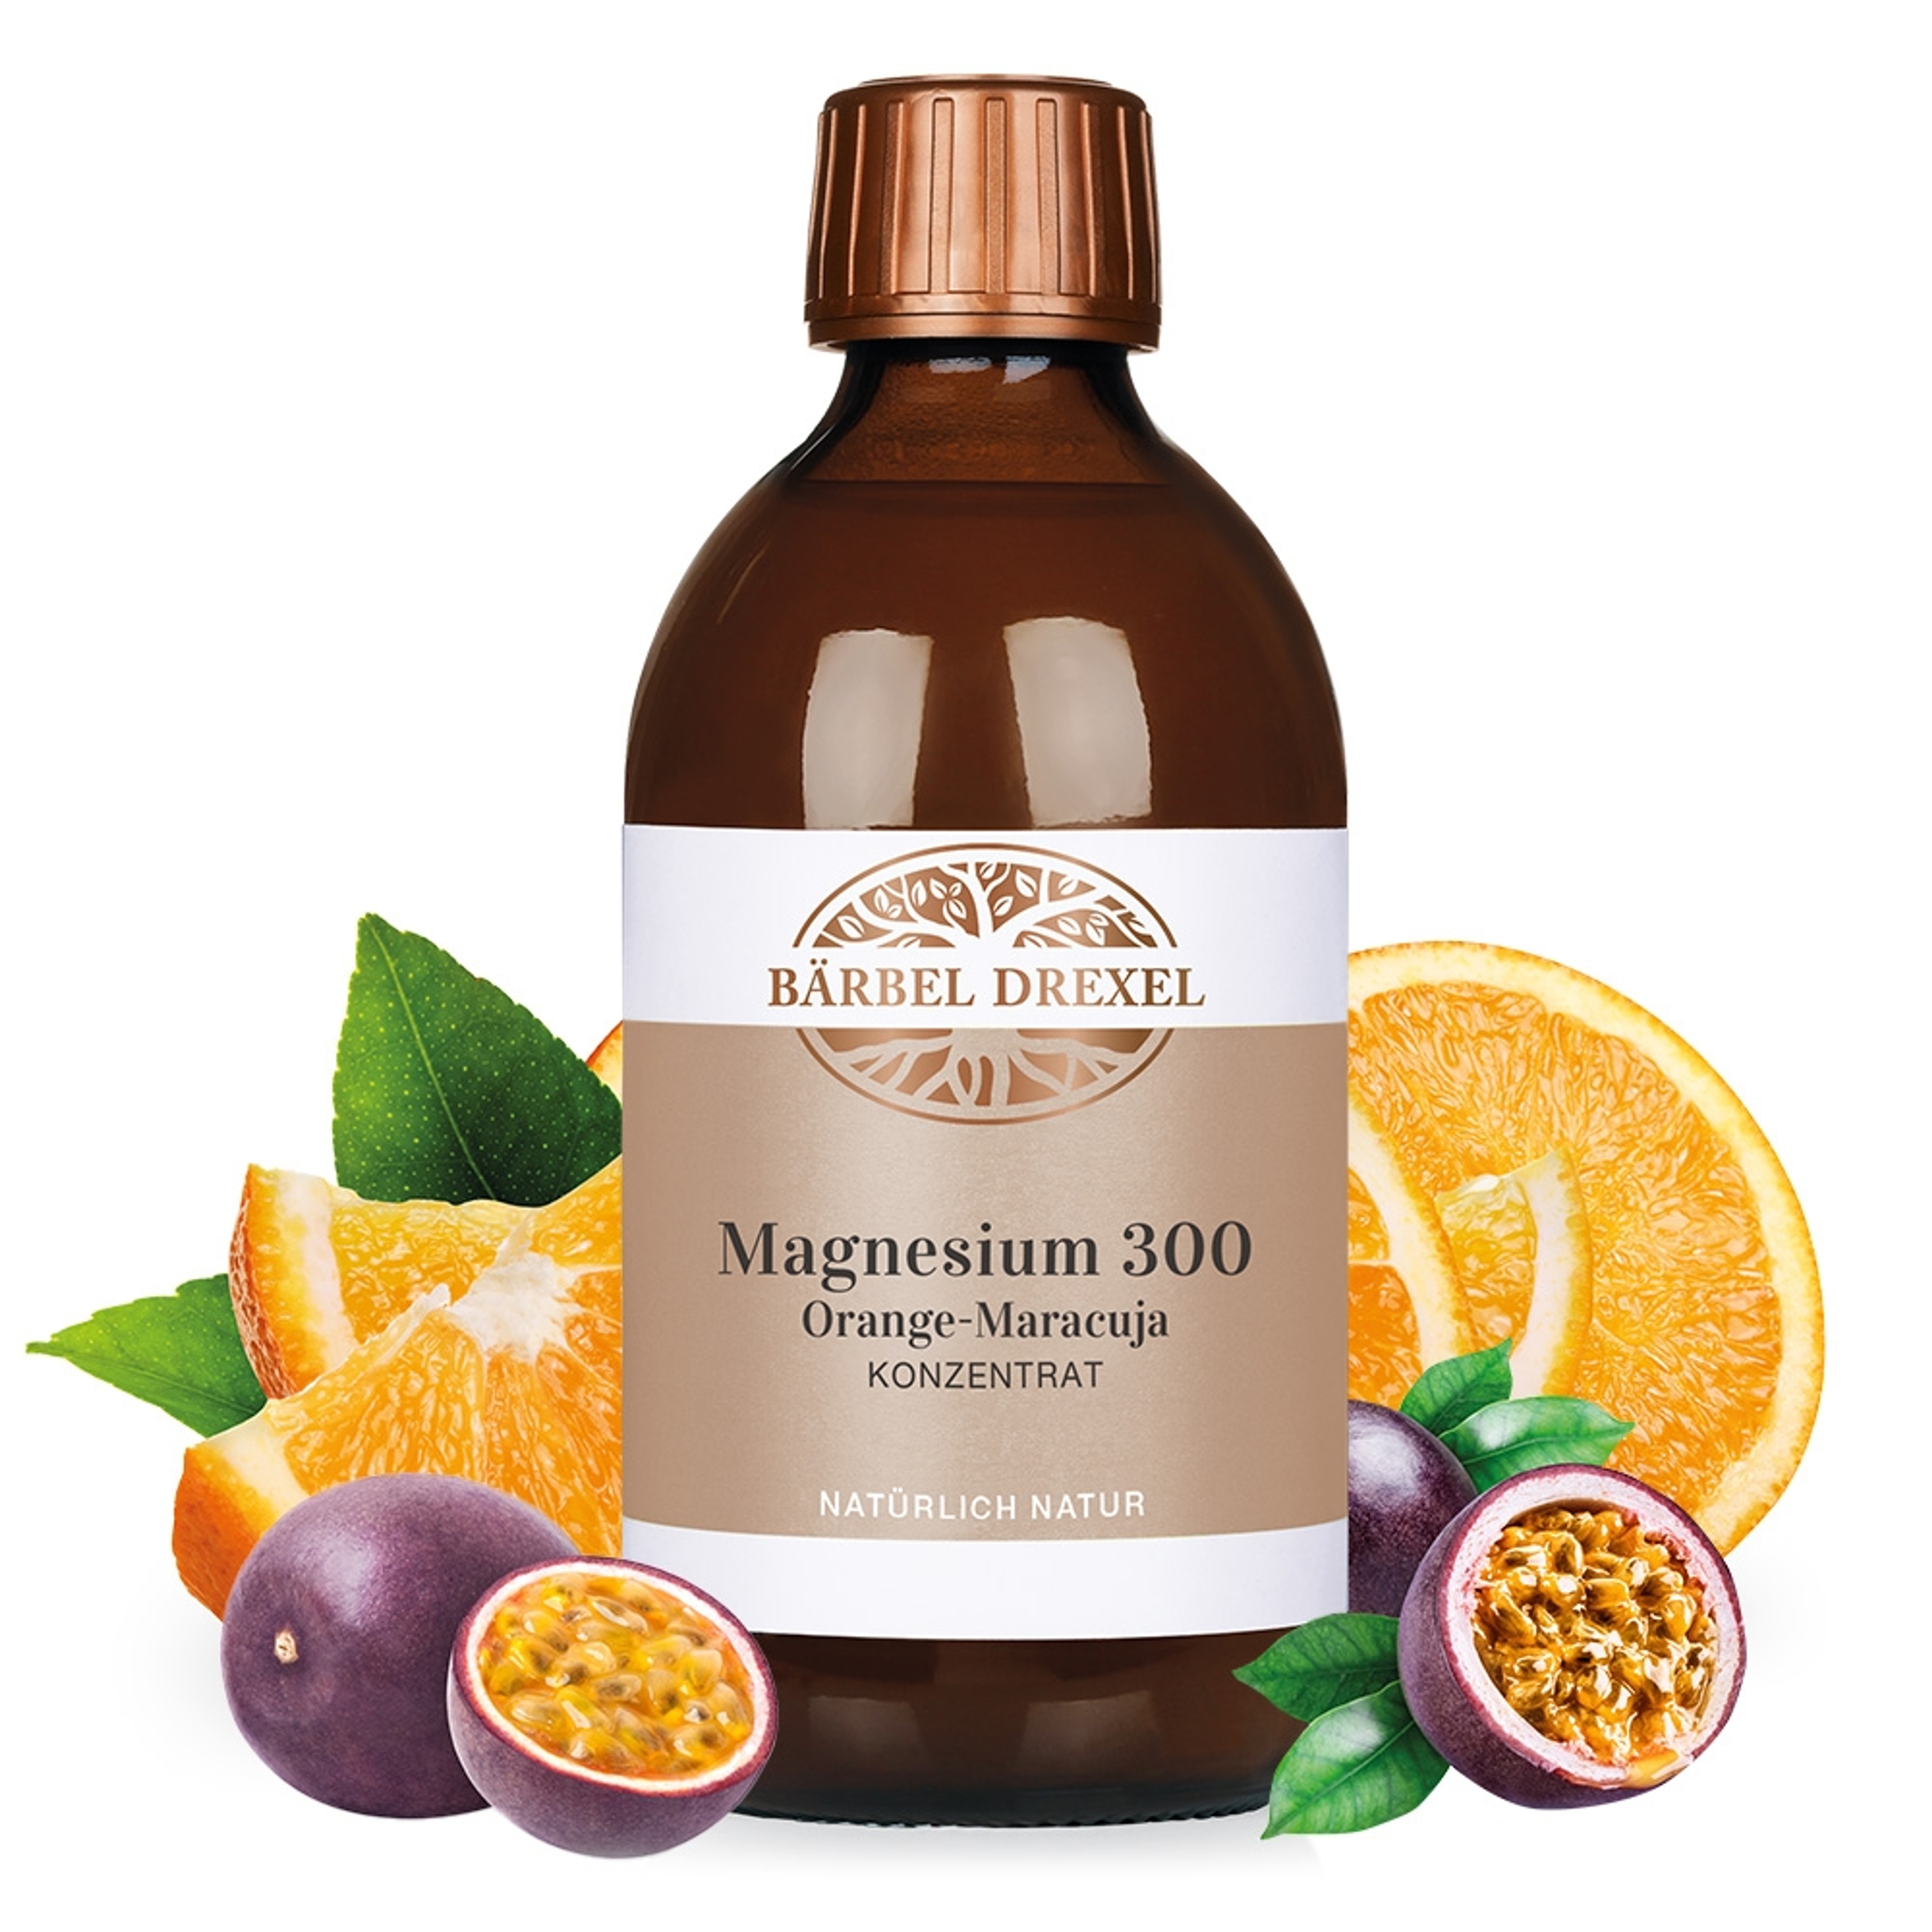 76913-magnesium-300-orange-maracuja-konzentrat-300ml_mit-deko.jpg